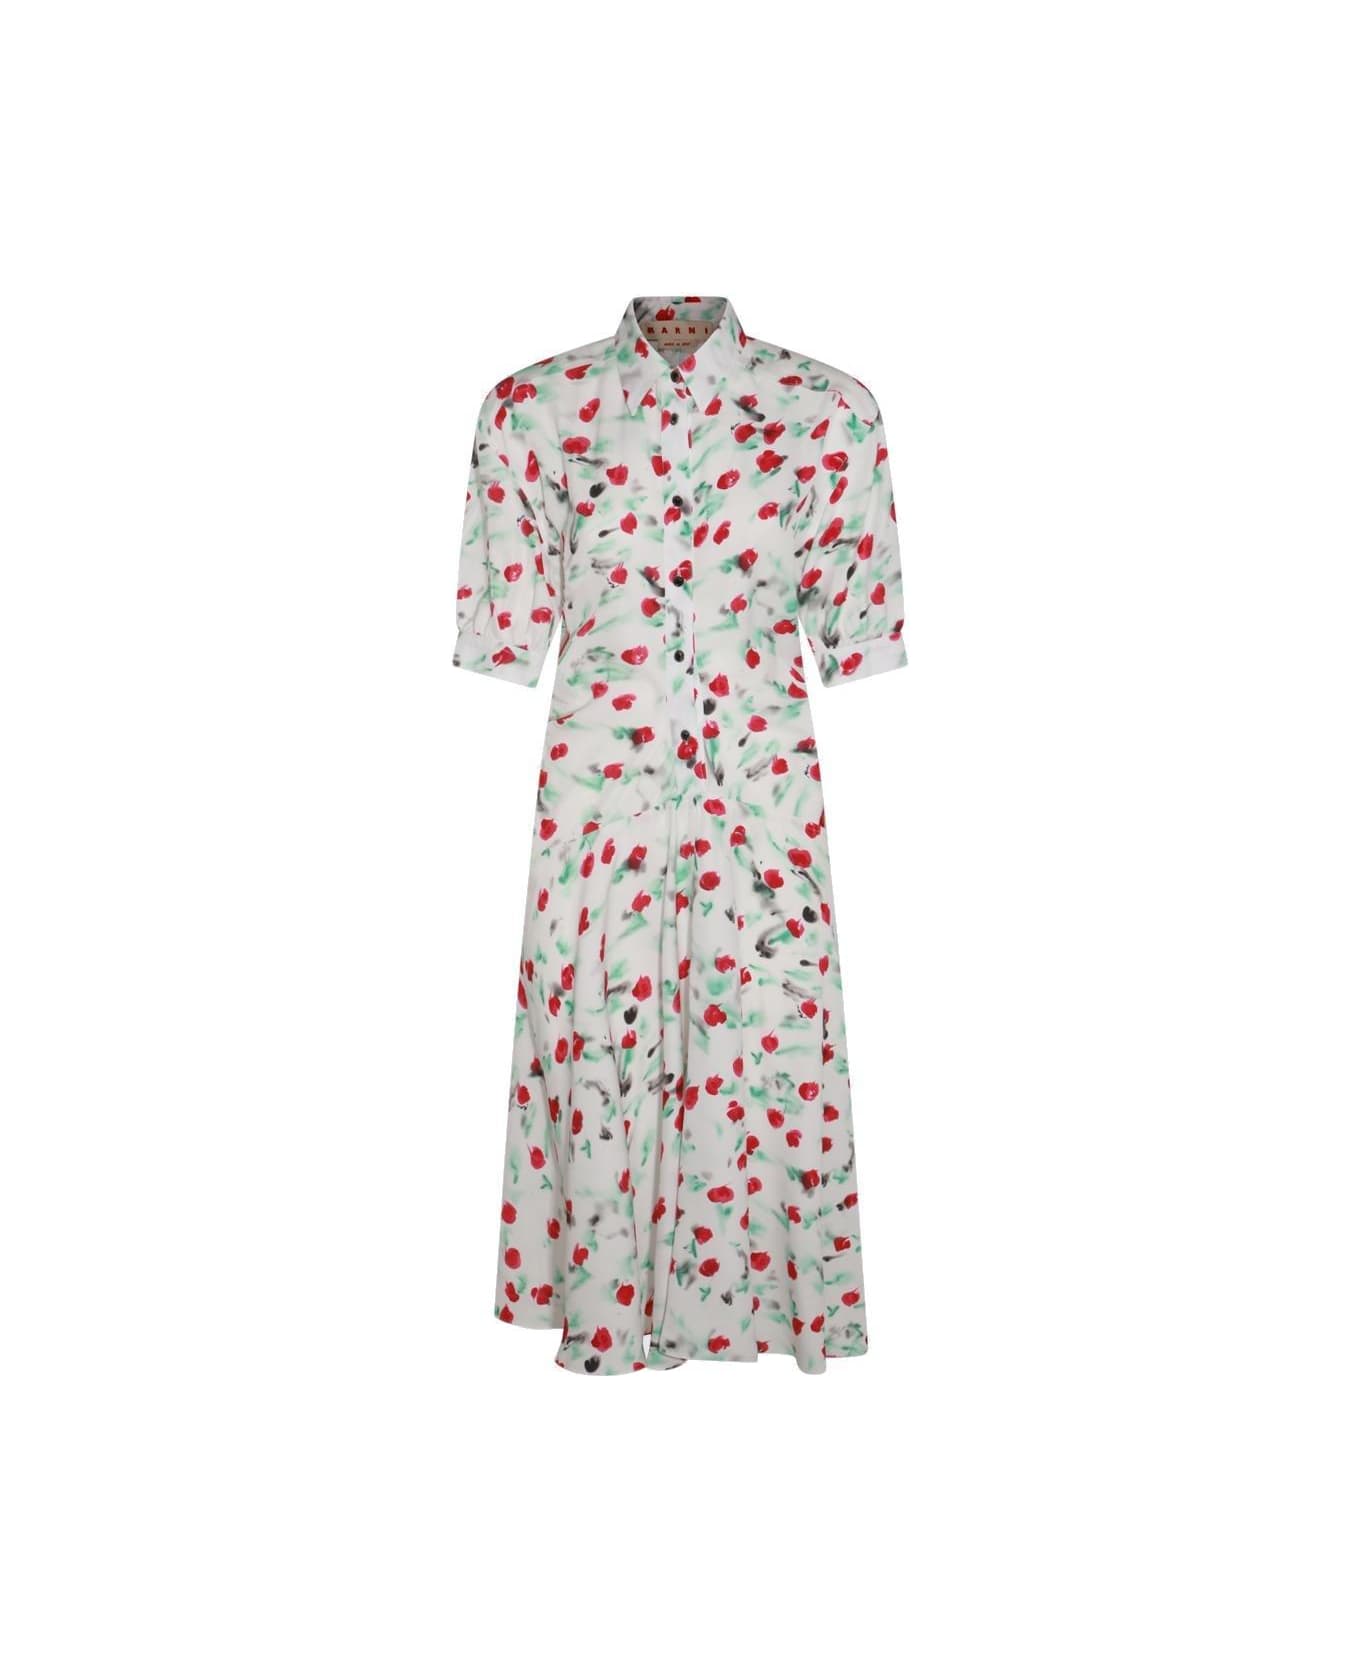 Marni Rose Print Shirt Dress - Lily White